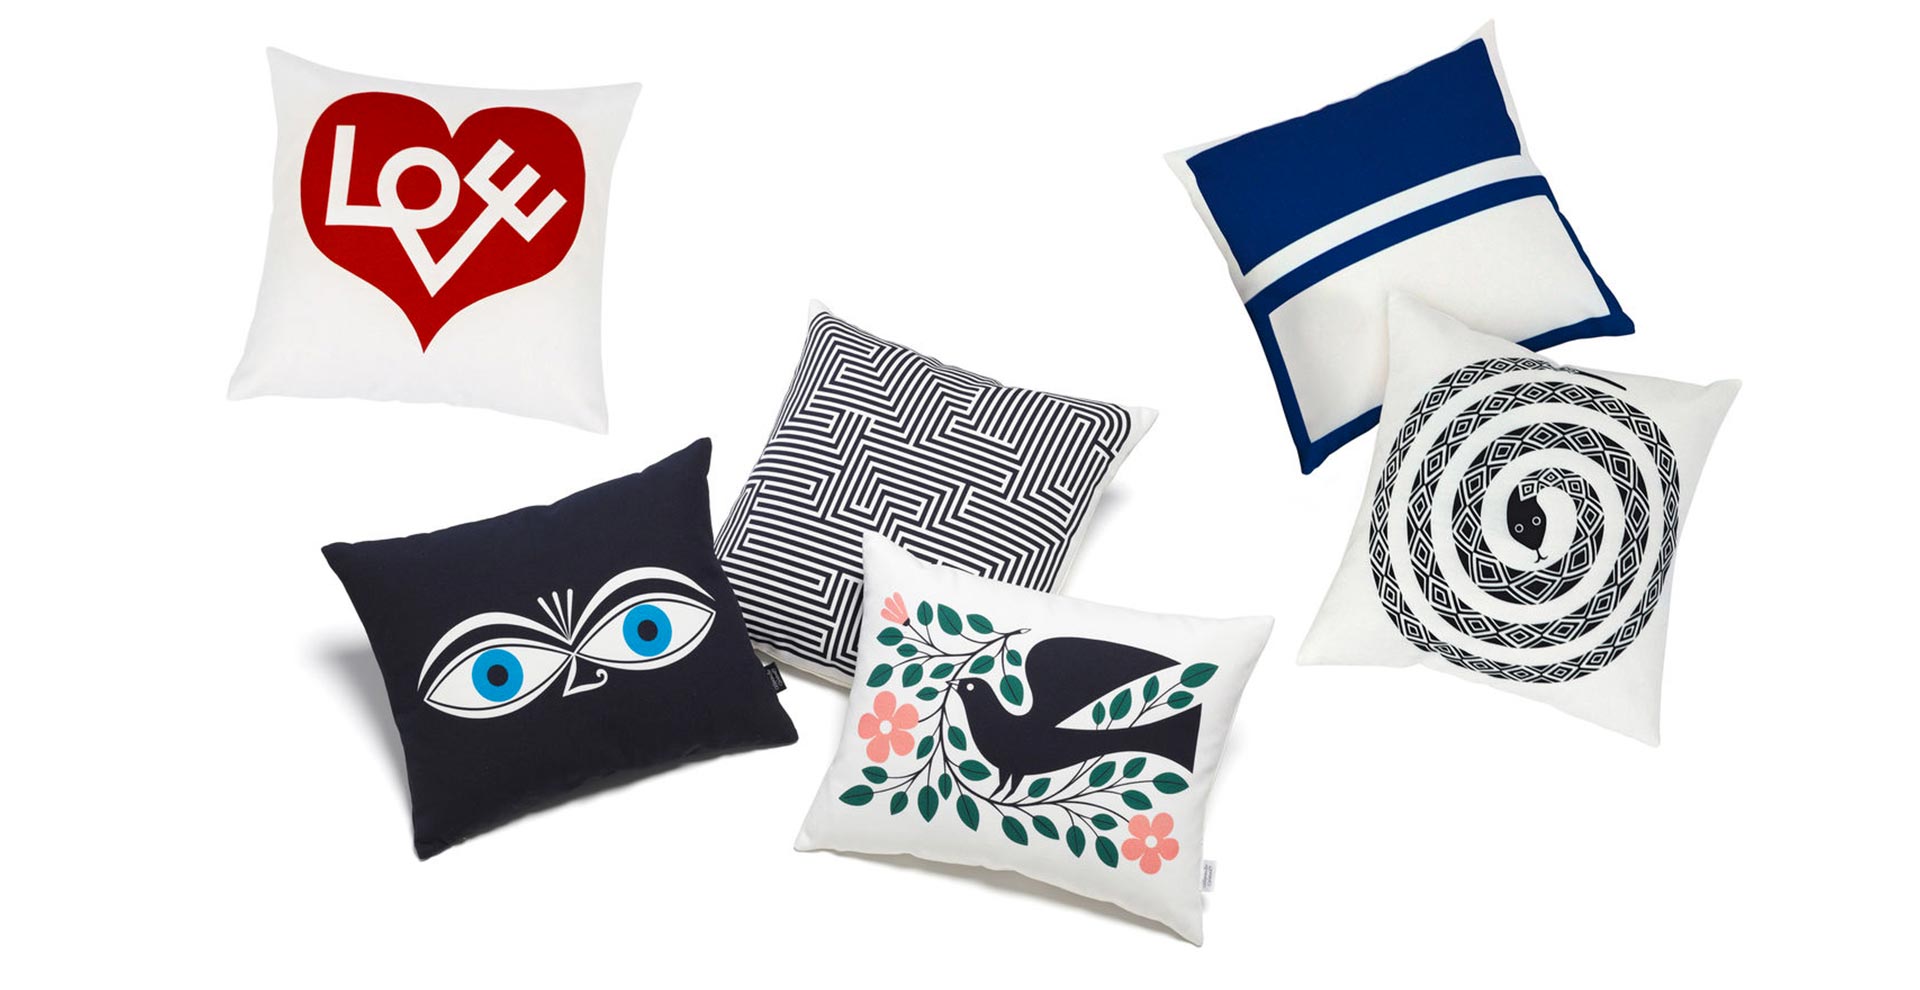 Graphic Print Pillows & Classic Maharam Pillows Vitra